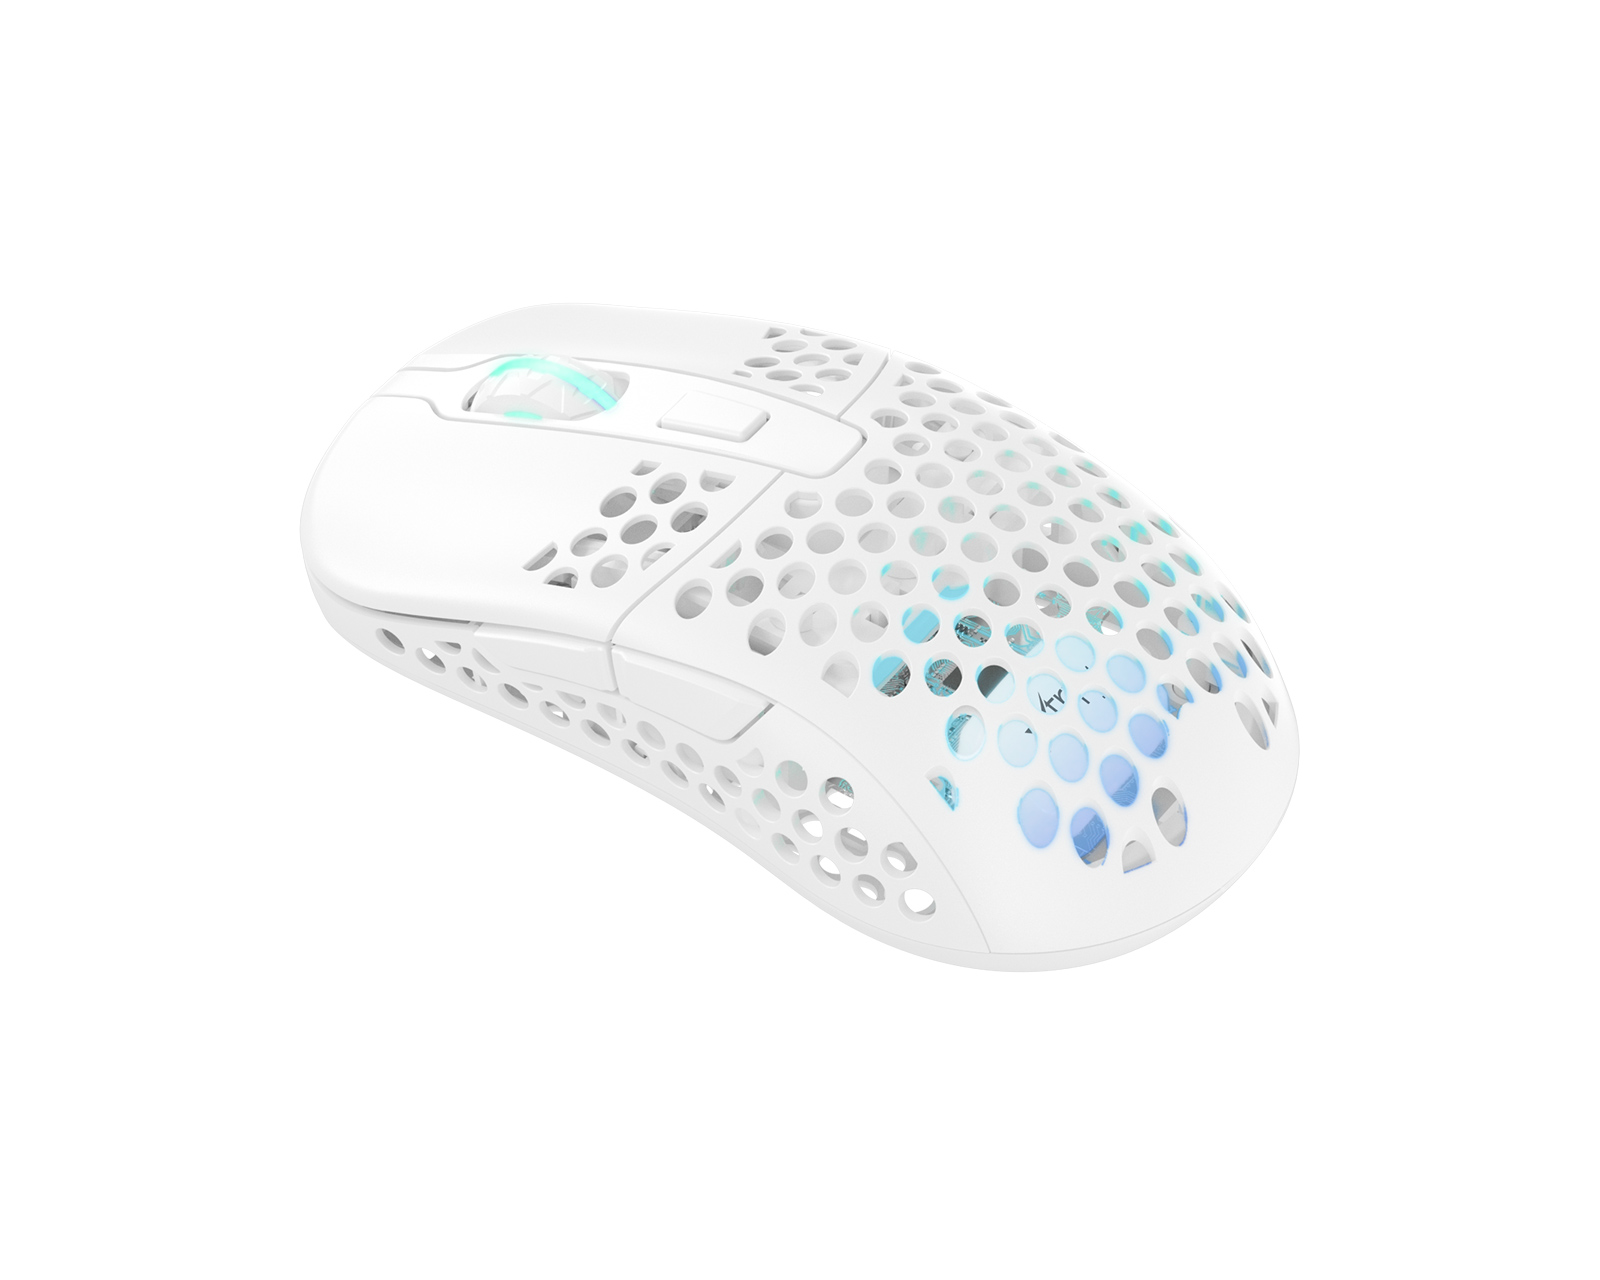 Xtrfy M42 Wireless RGB Gaming Mouse - White - us.MaxGaming.com